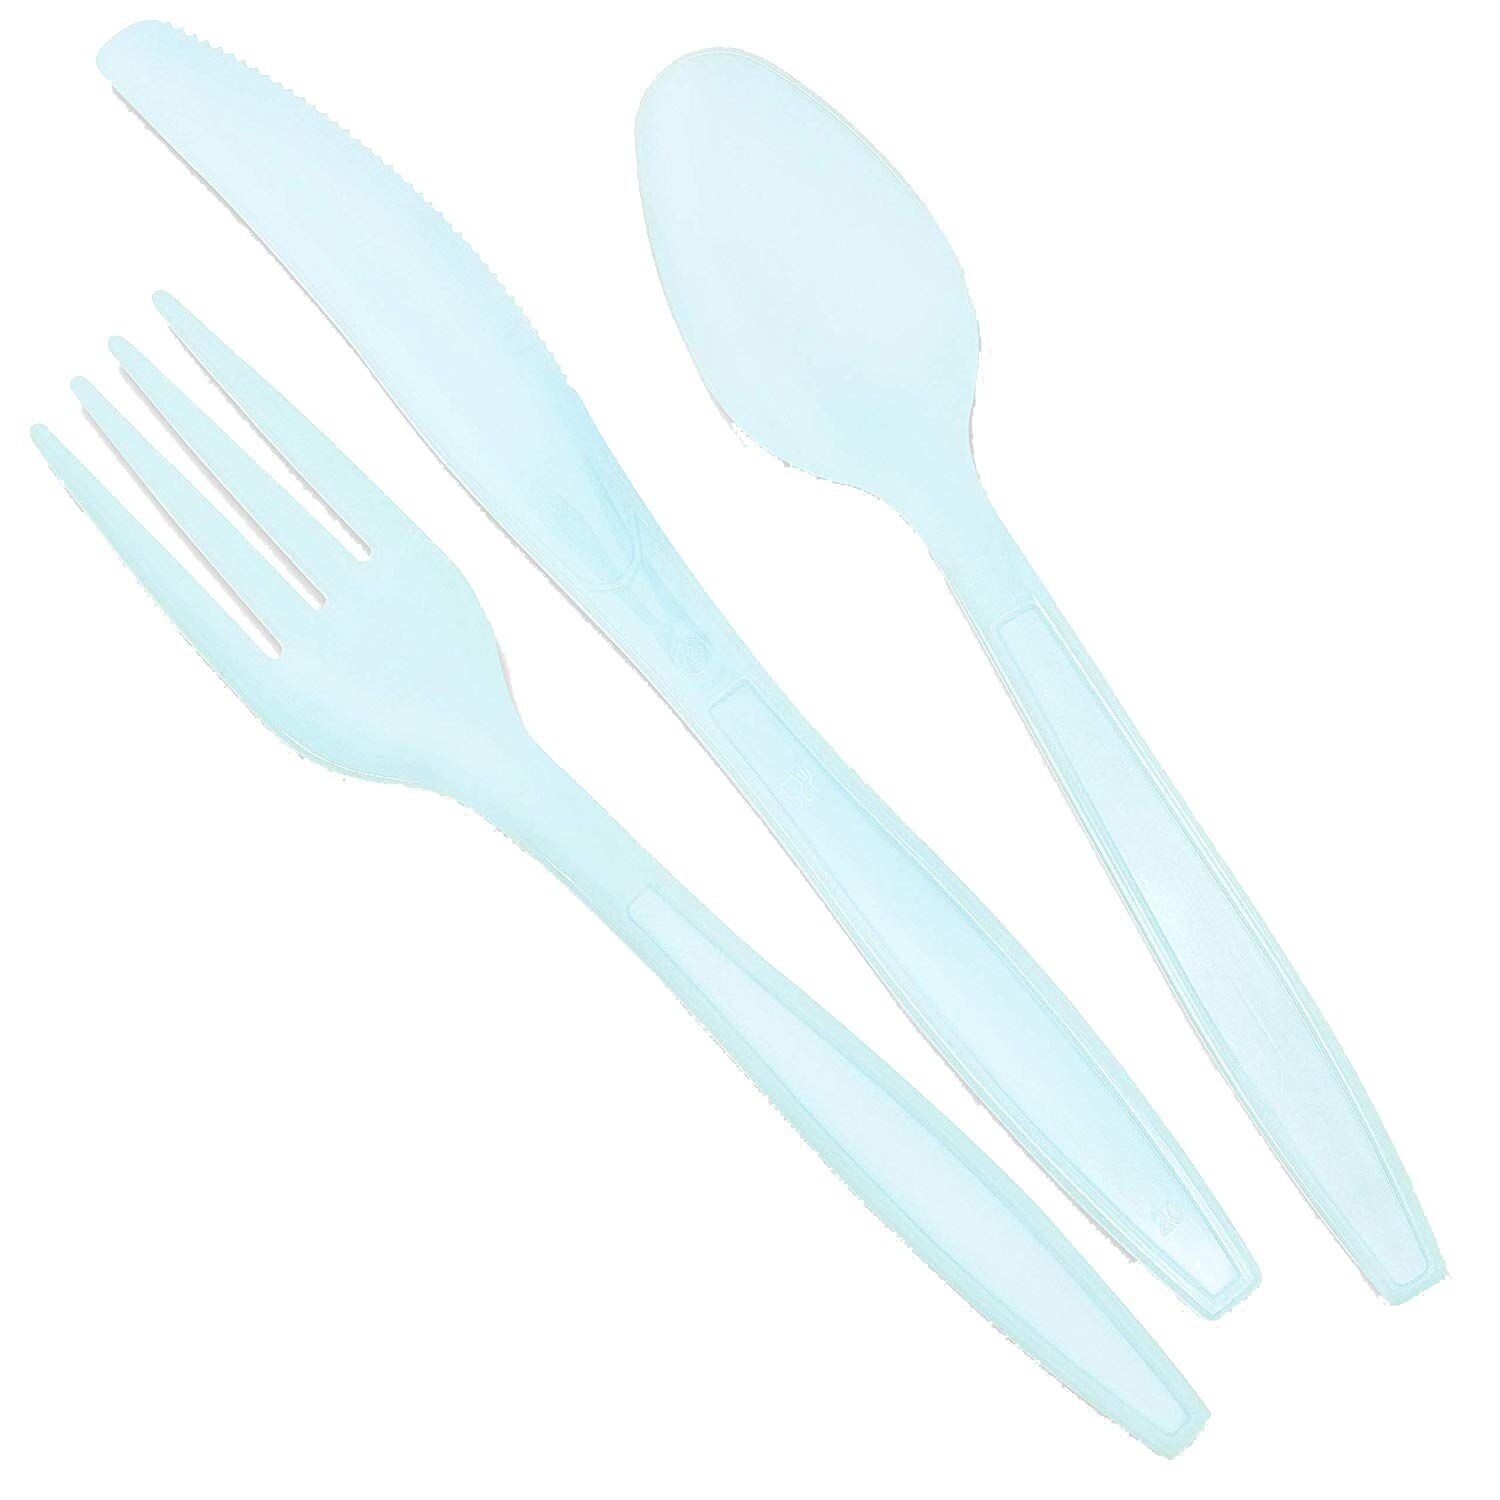 plastic baby cutlery